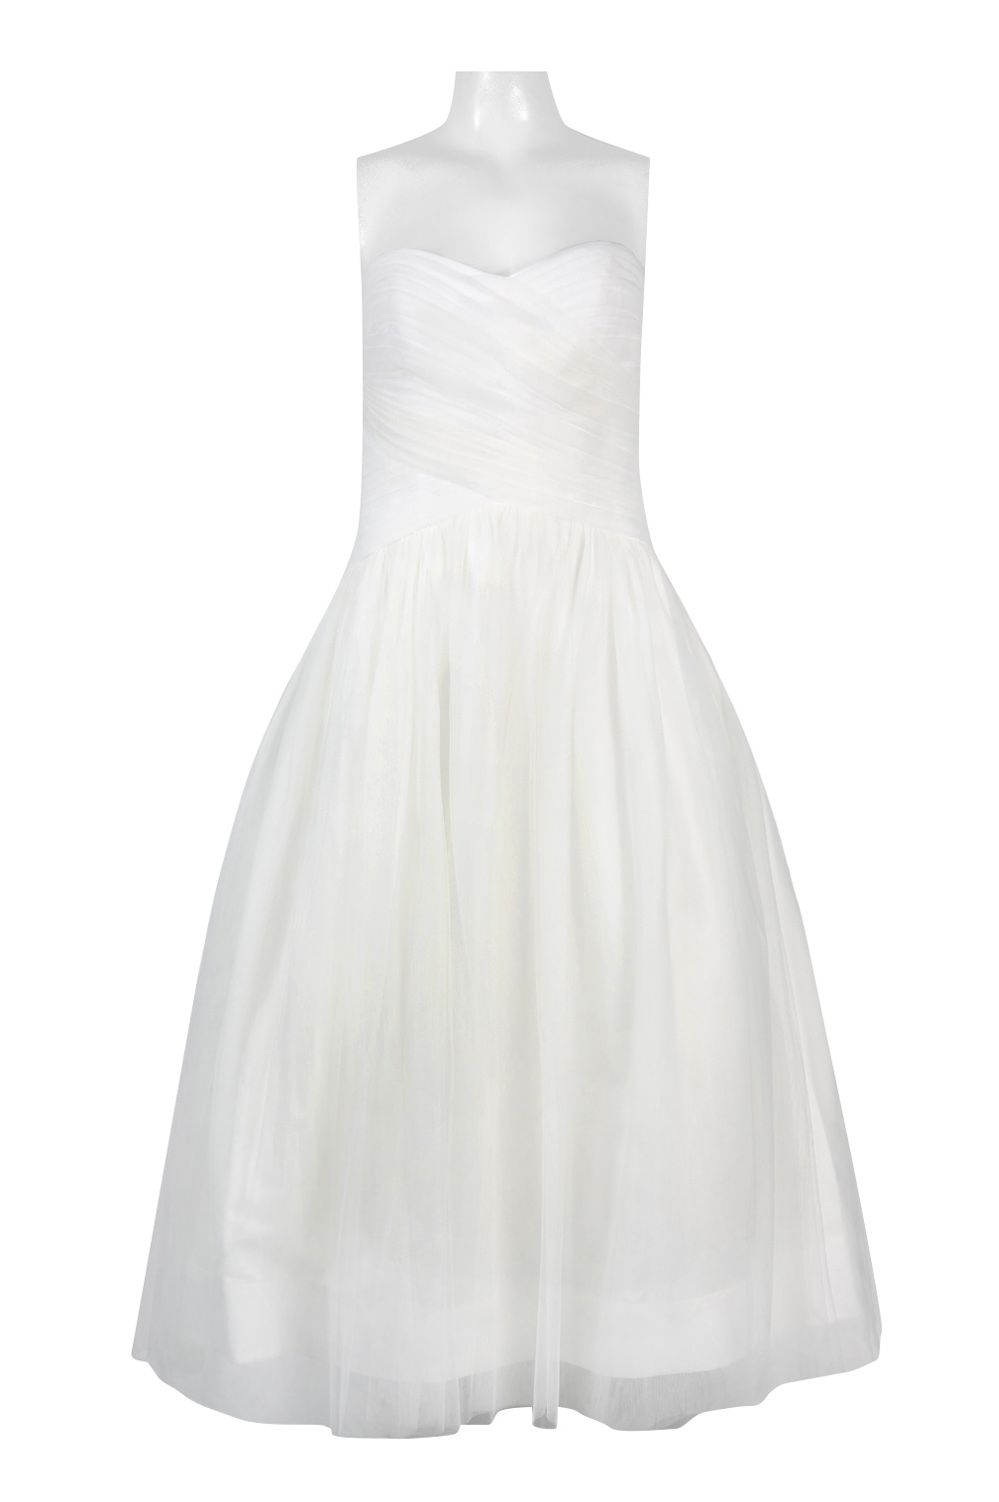 Monique Lhuillier White/Ivory Chiffon Ball Gown Sizes 2, 6, 18